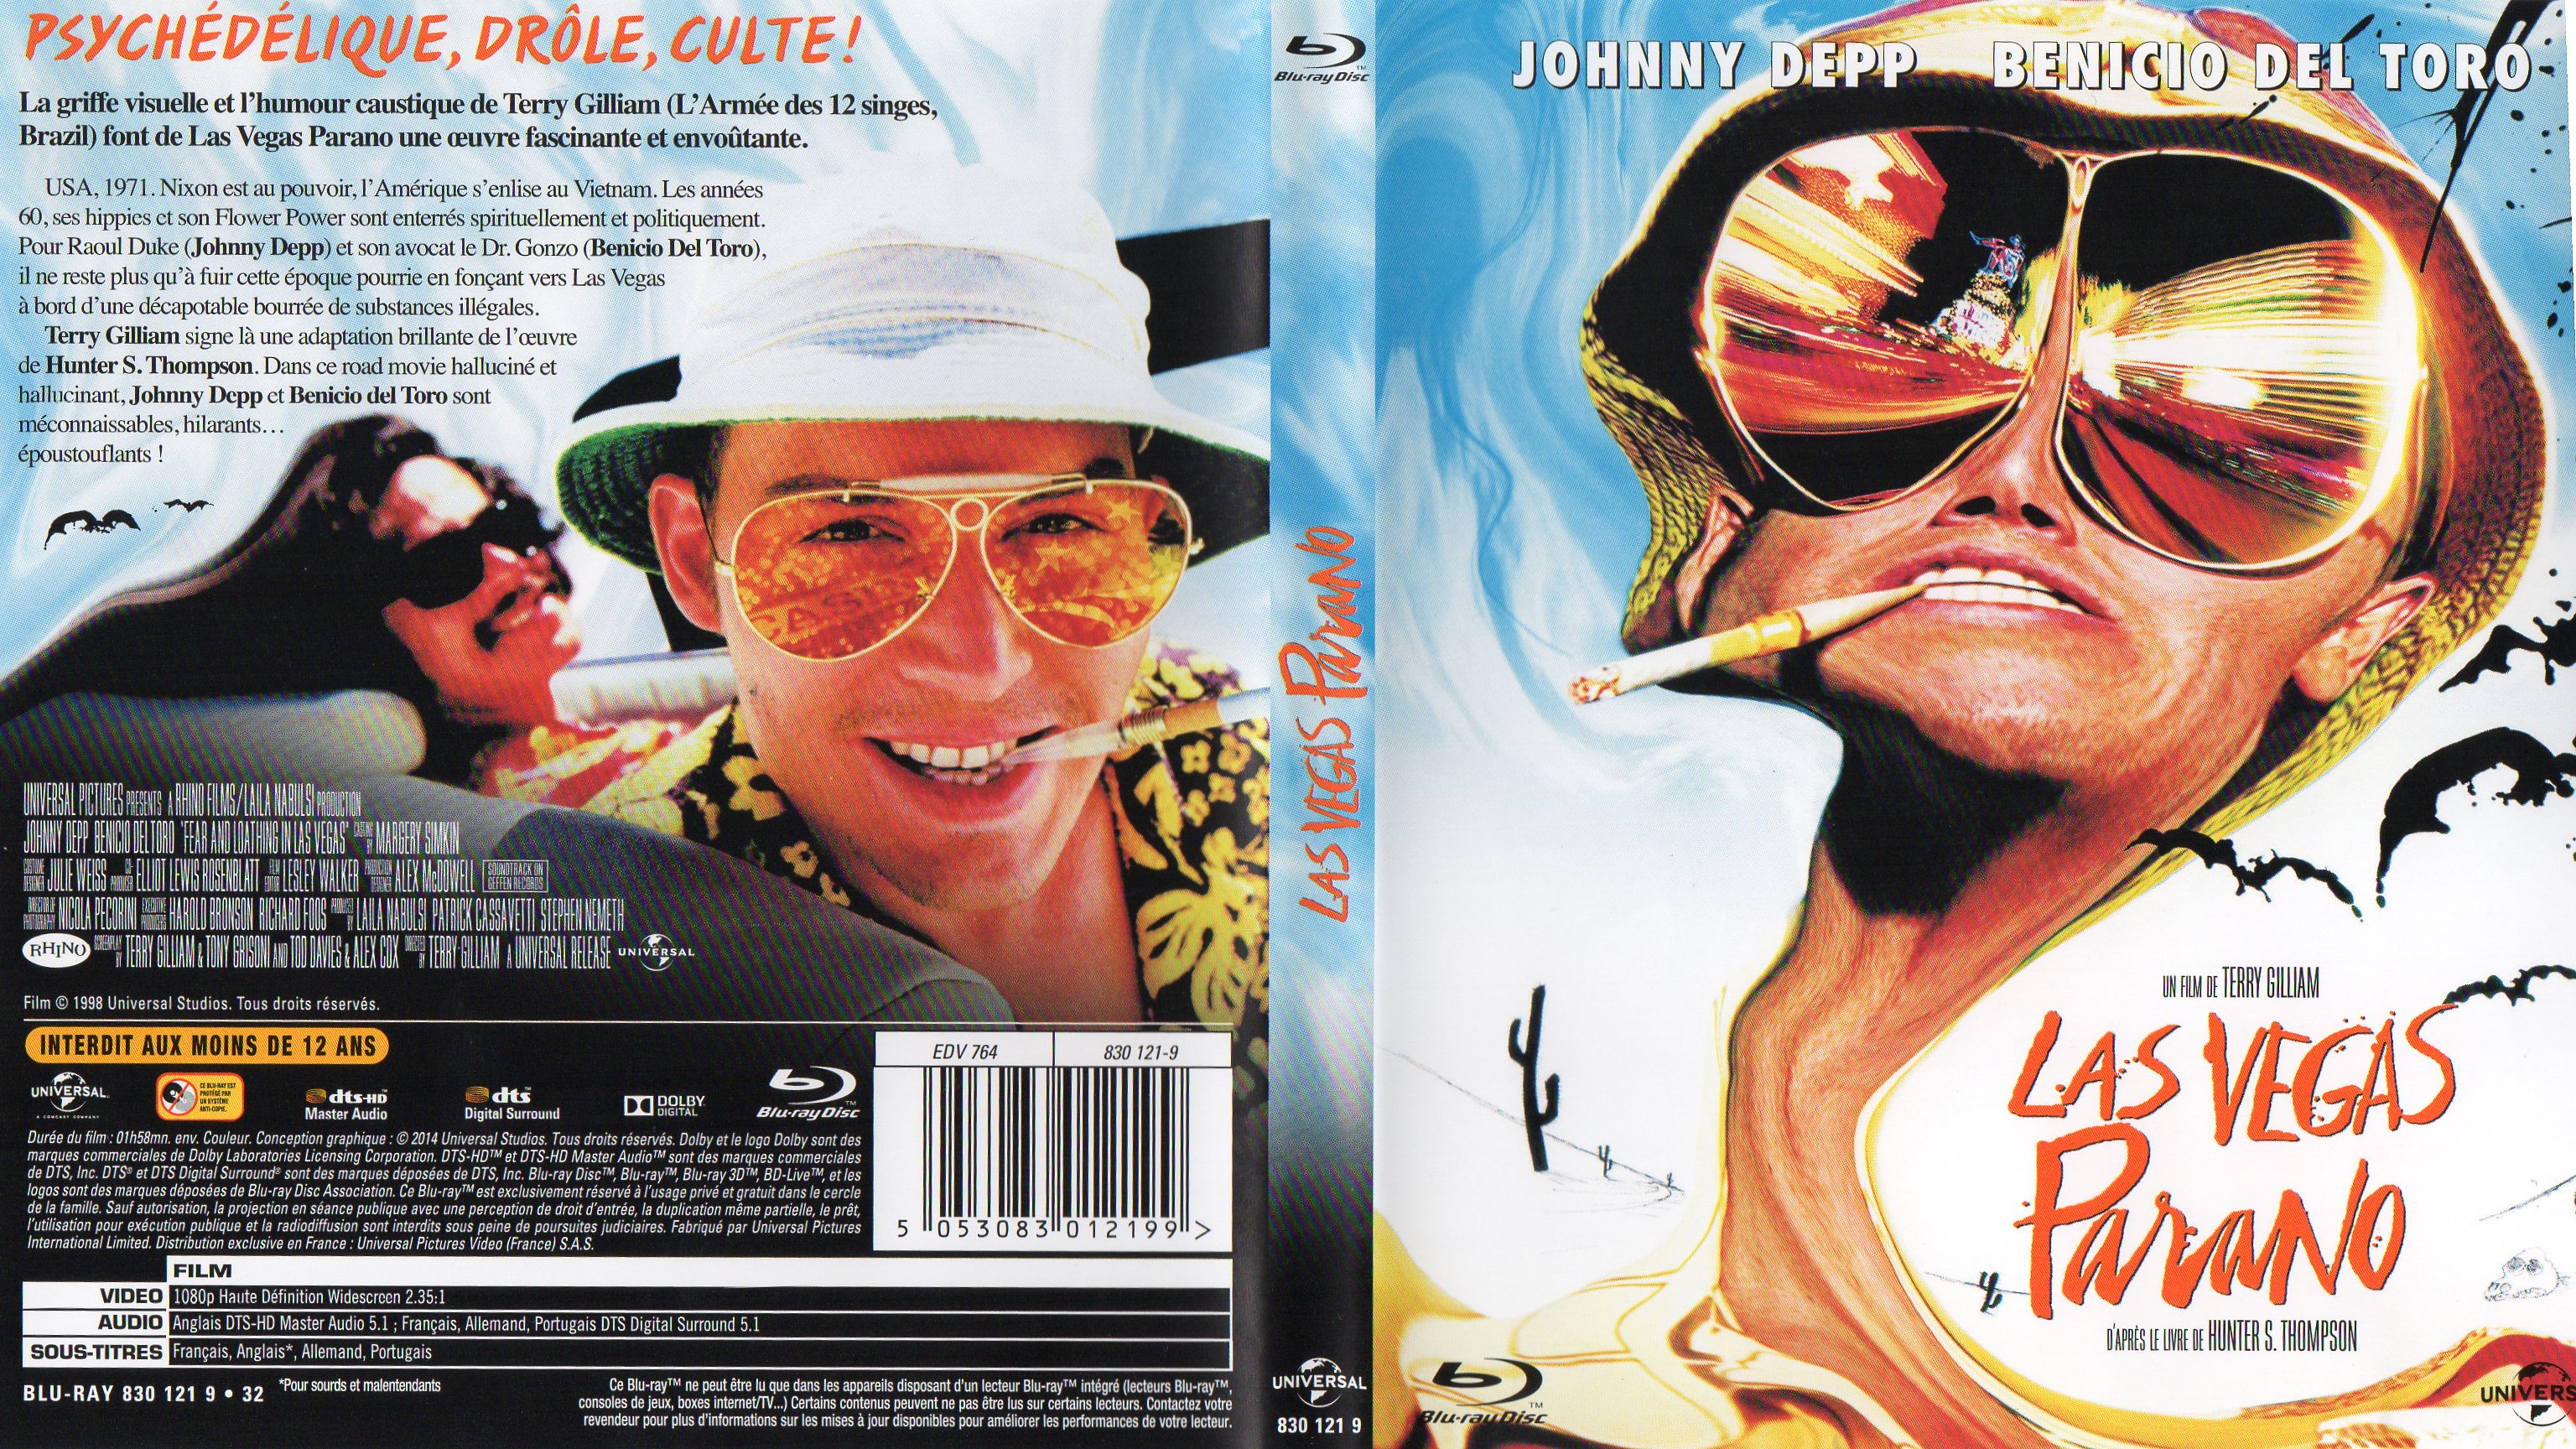 Jaquette DVD Las Vegas Parano (BLU-RAY) v2